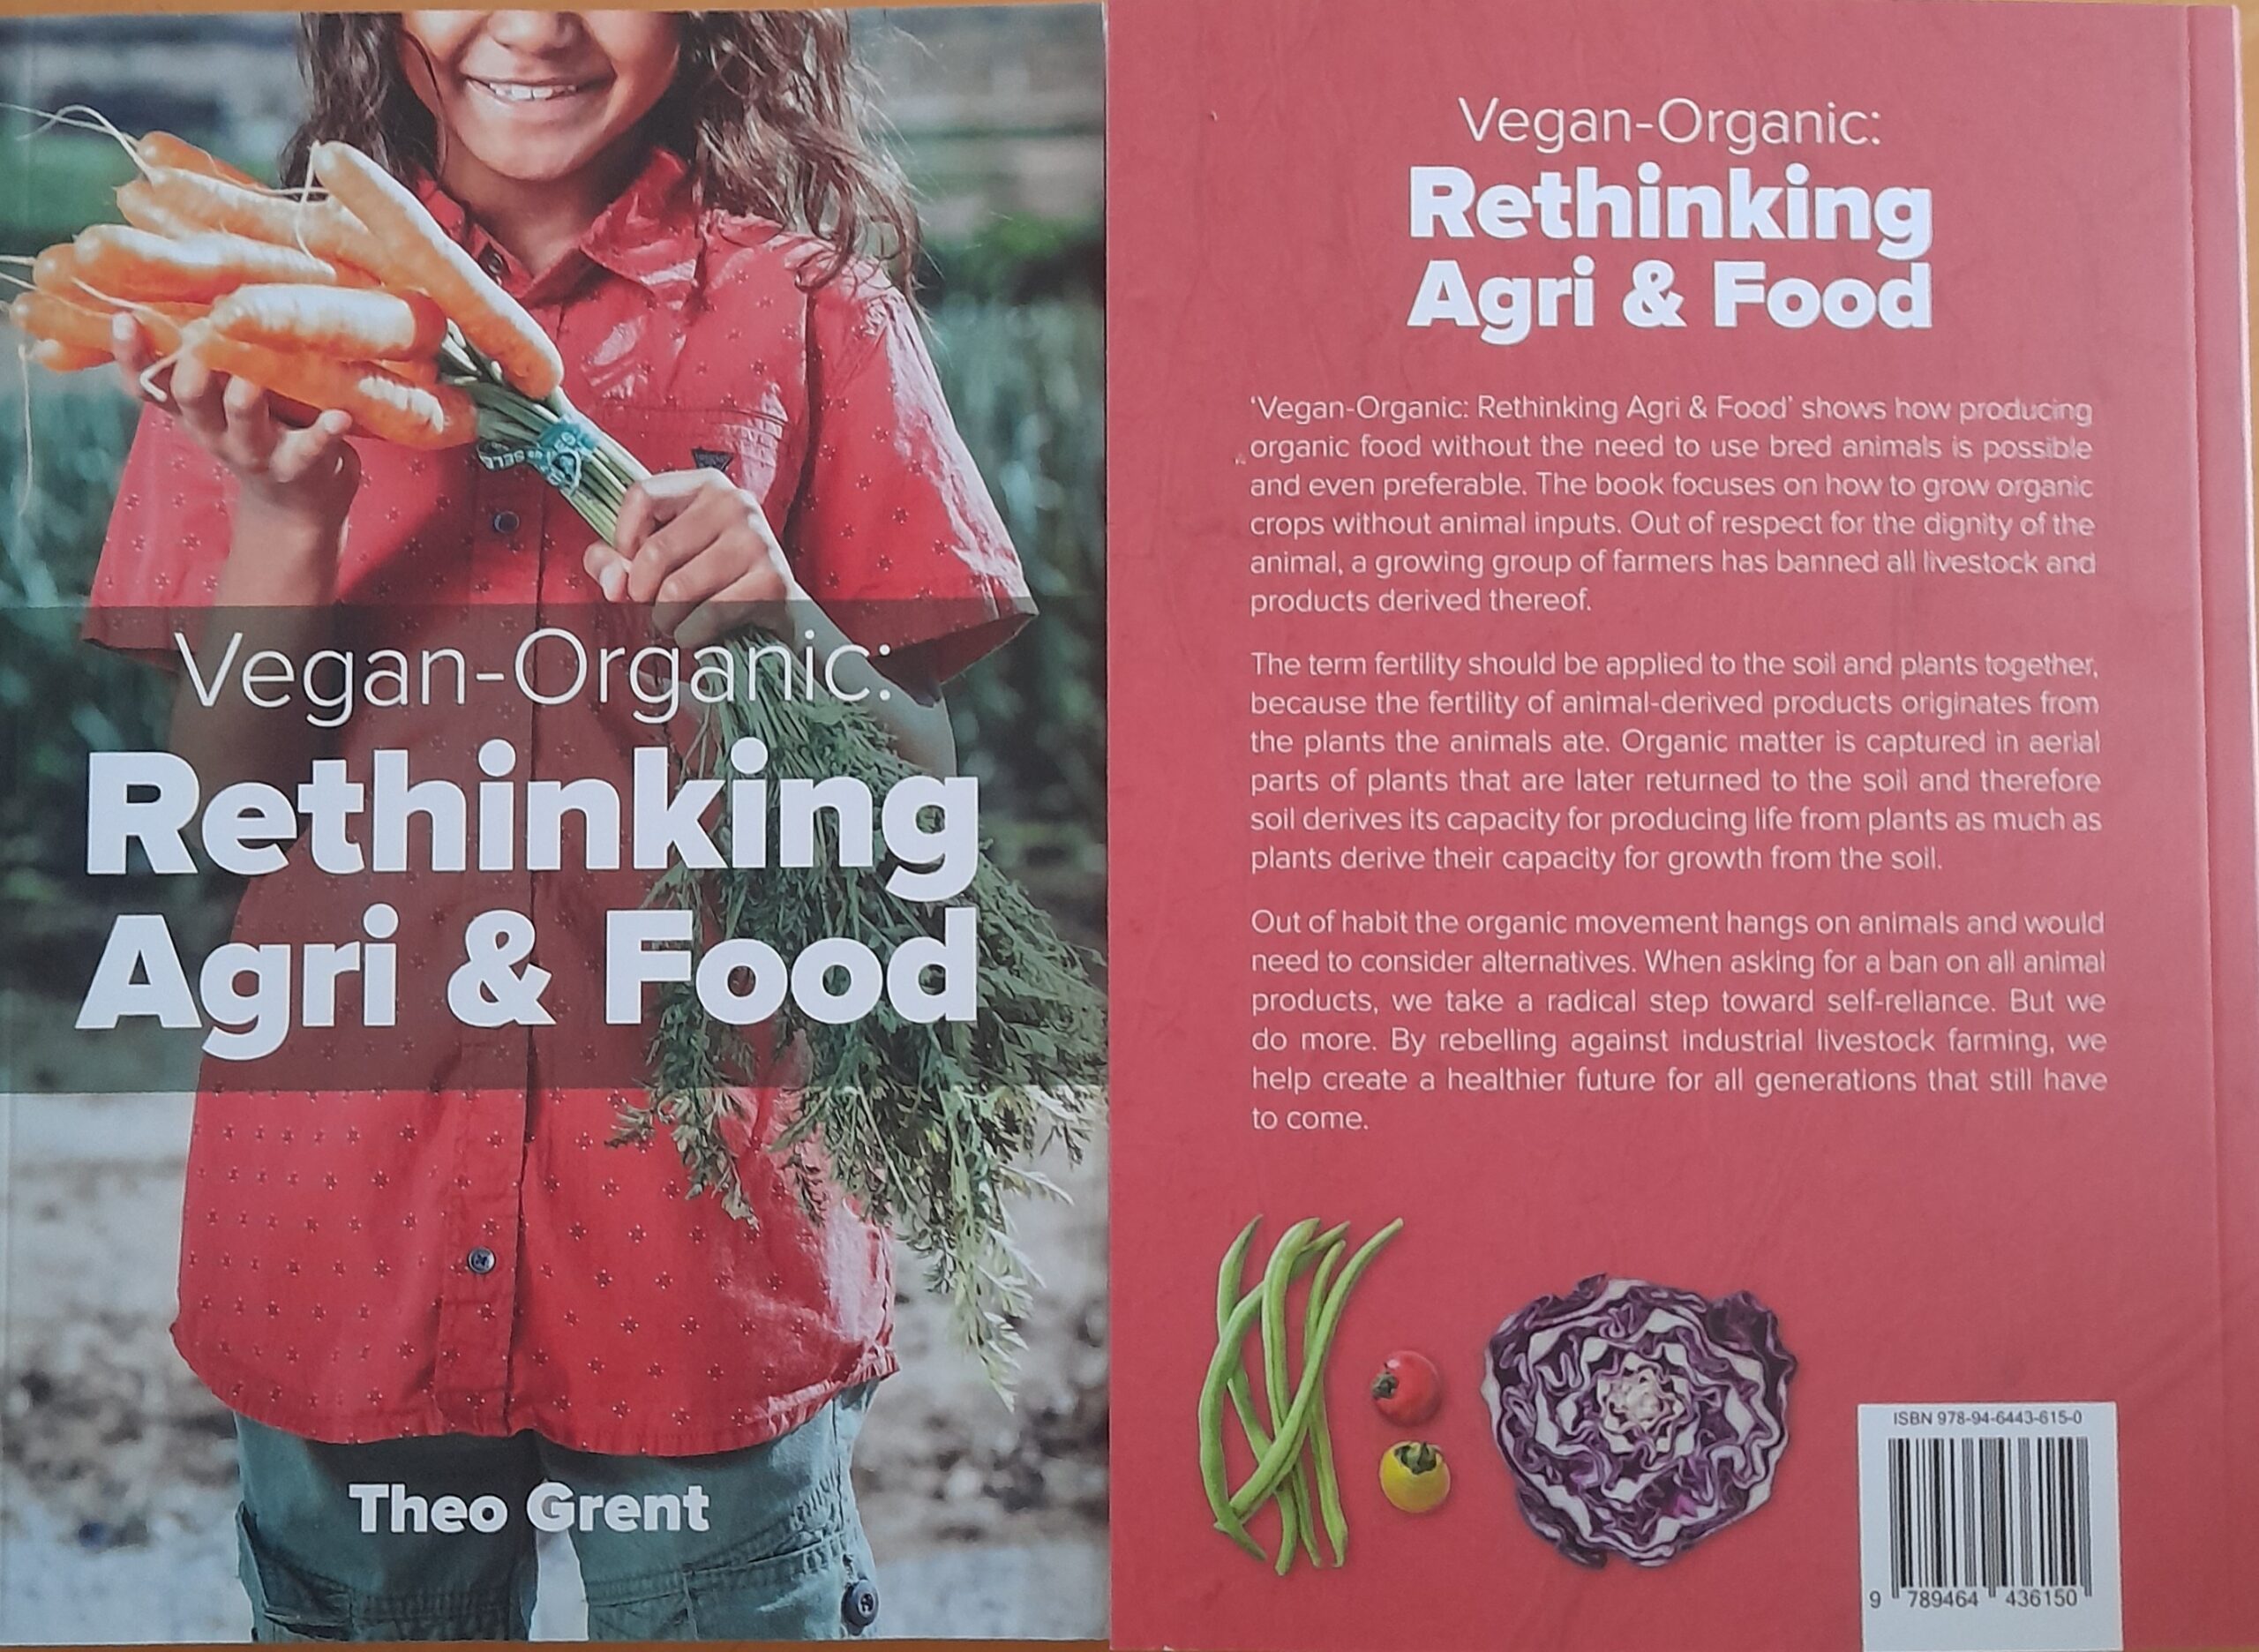 Vegan-Organic: Rethinking Agri & Food